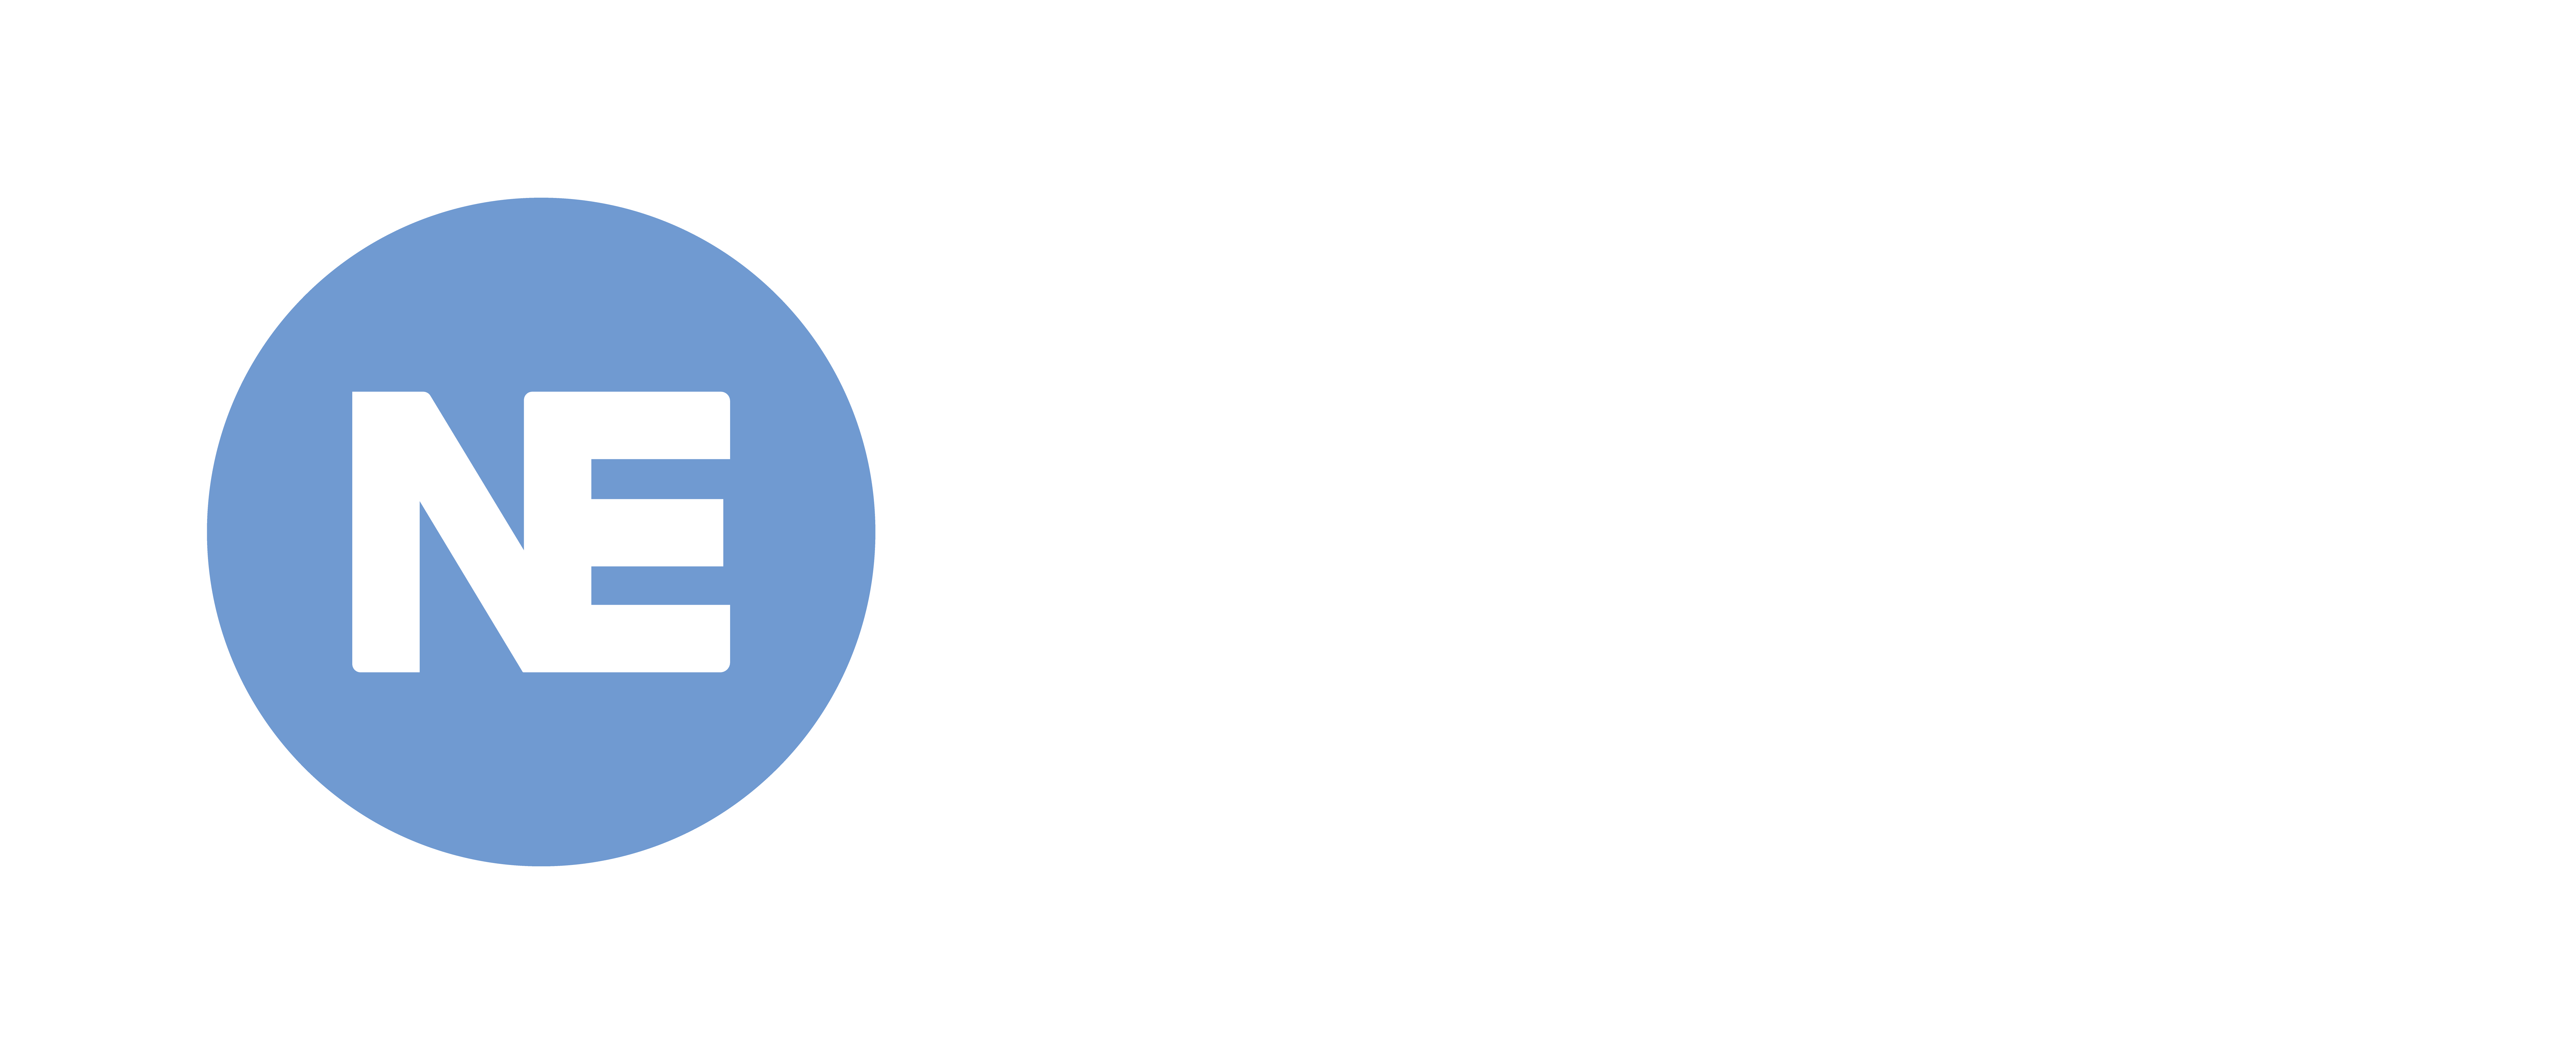 Nueva Economia